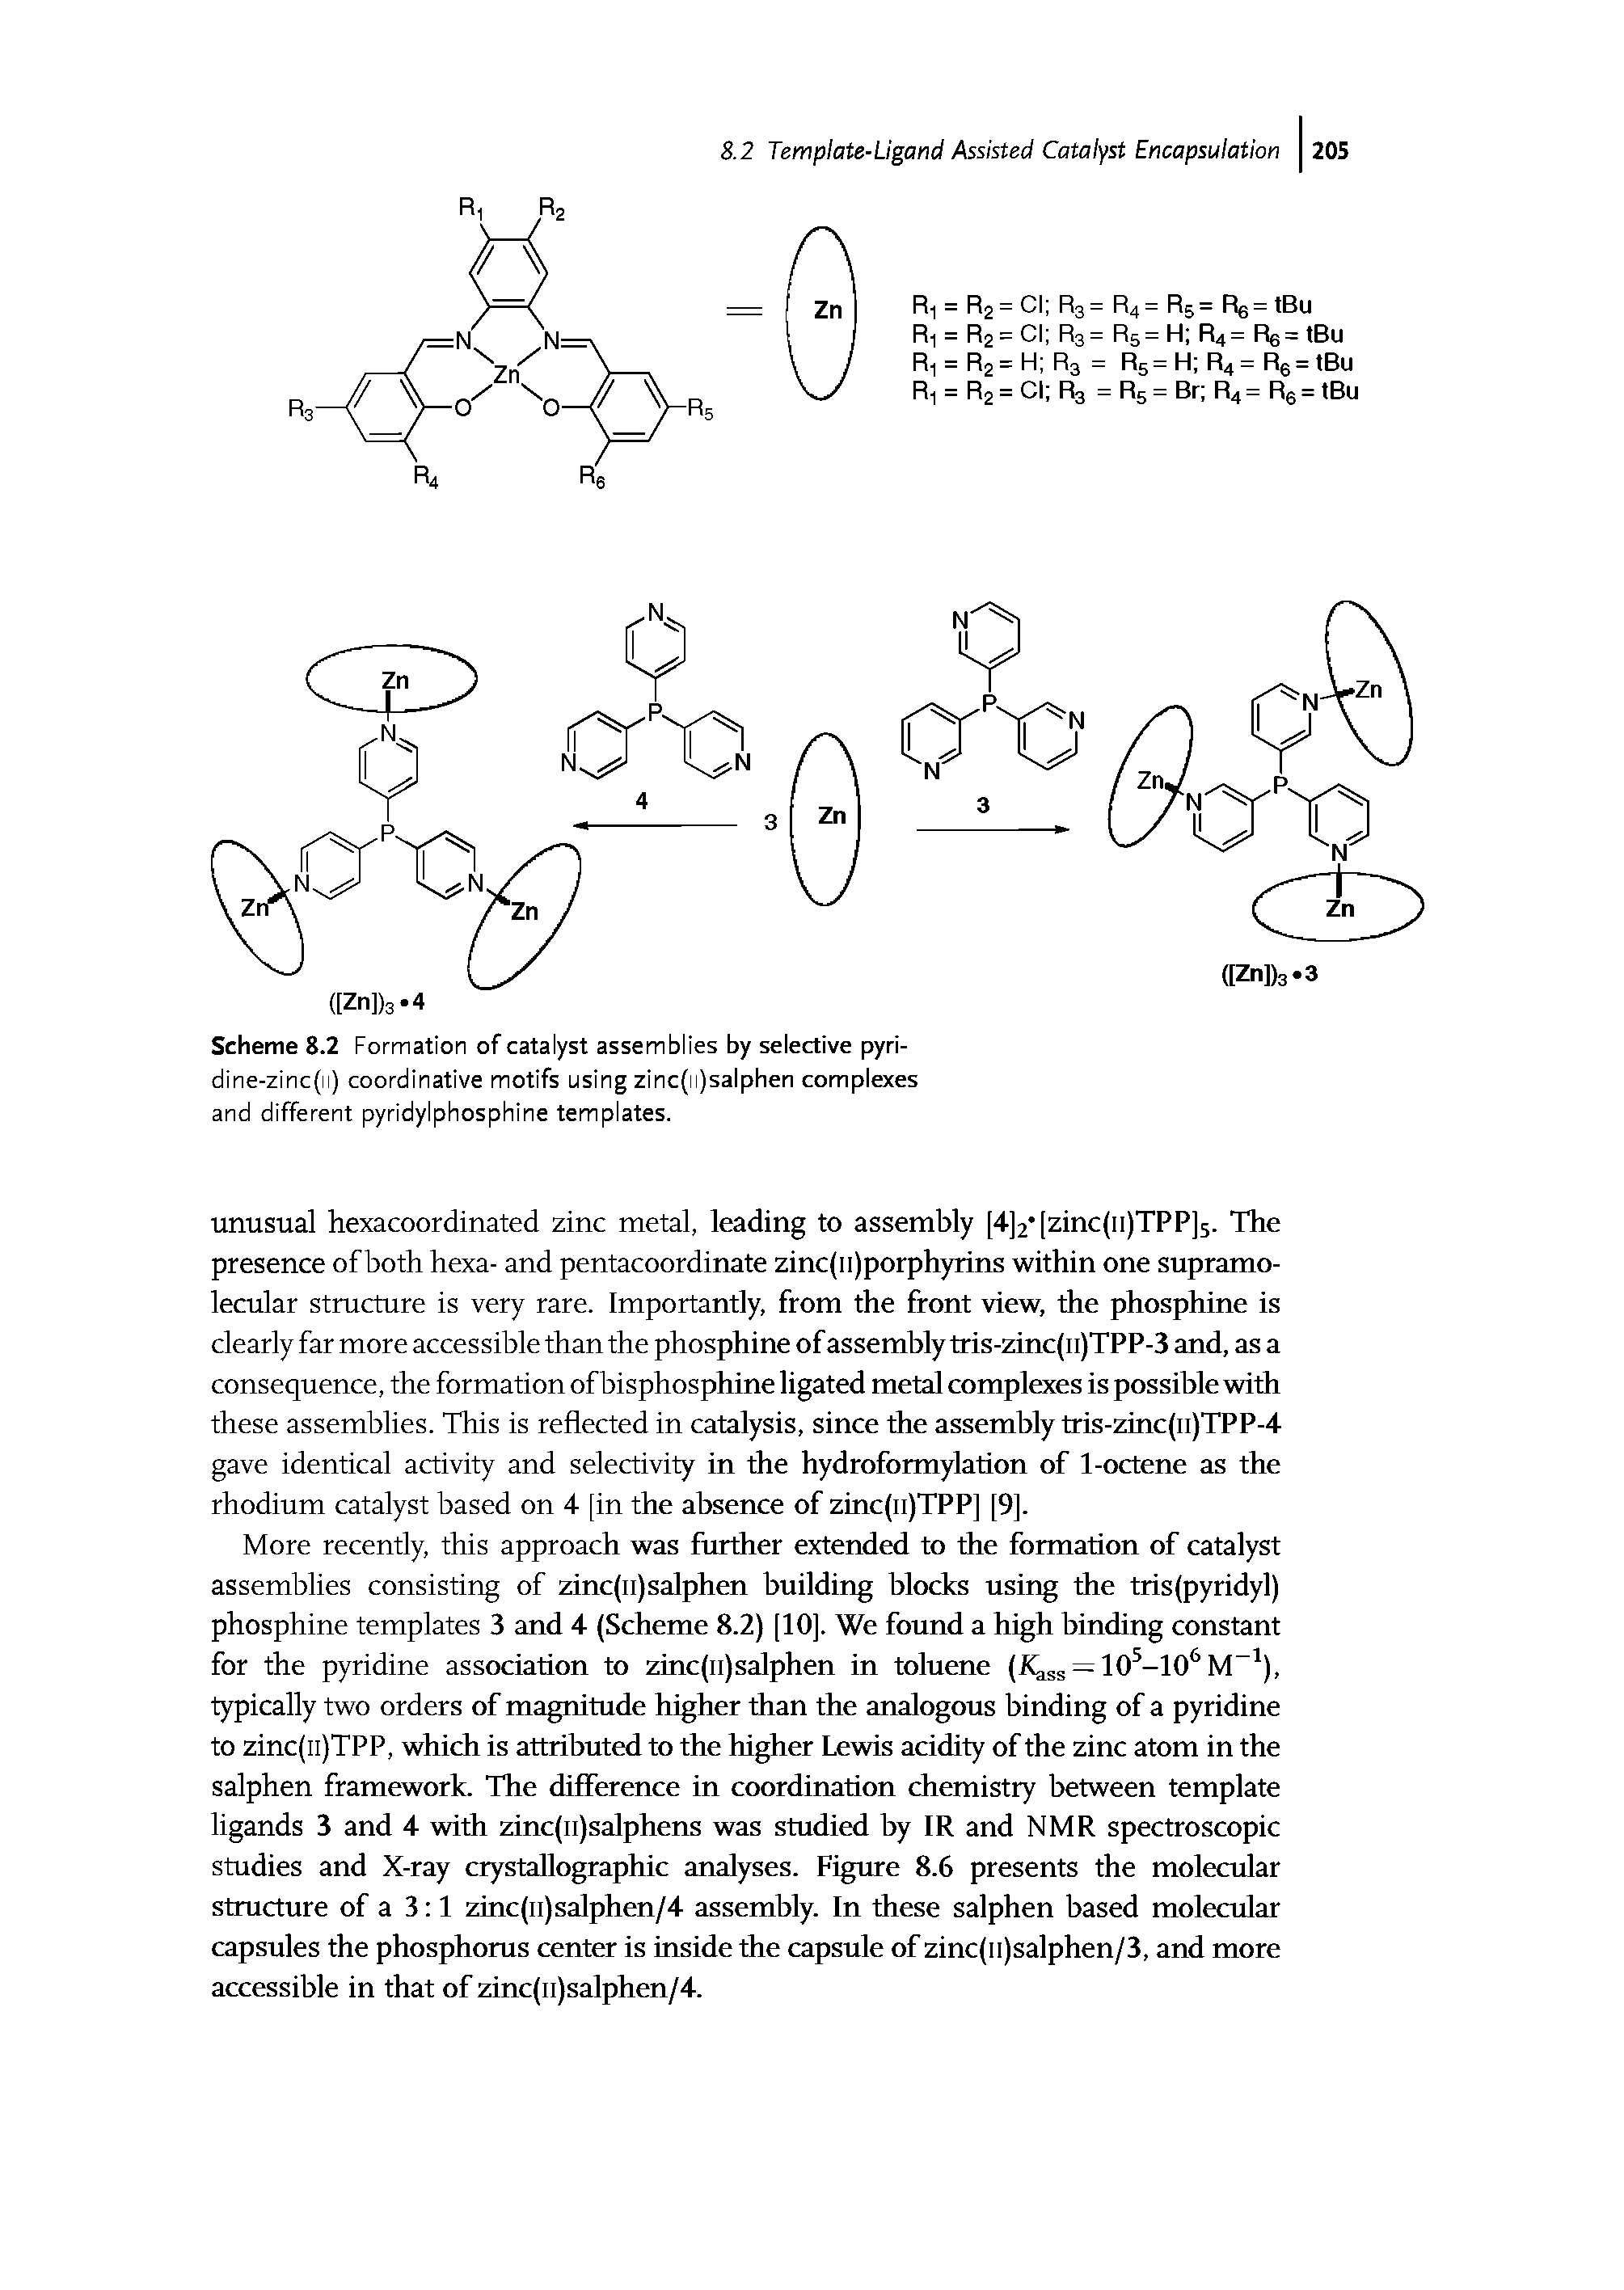 Scheme 8.2 Formation of catalyst assemblies by selective pyri-dine-zinc(ii) coordinative motifs using zinc(ii)salphen complexes and different pyridylphosphine templates.